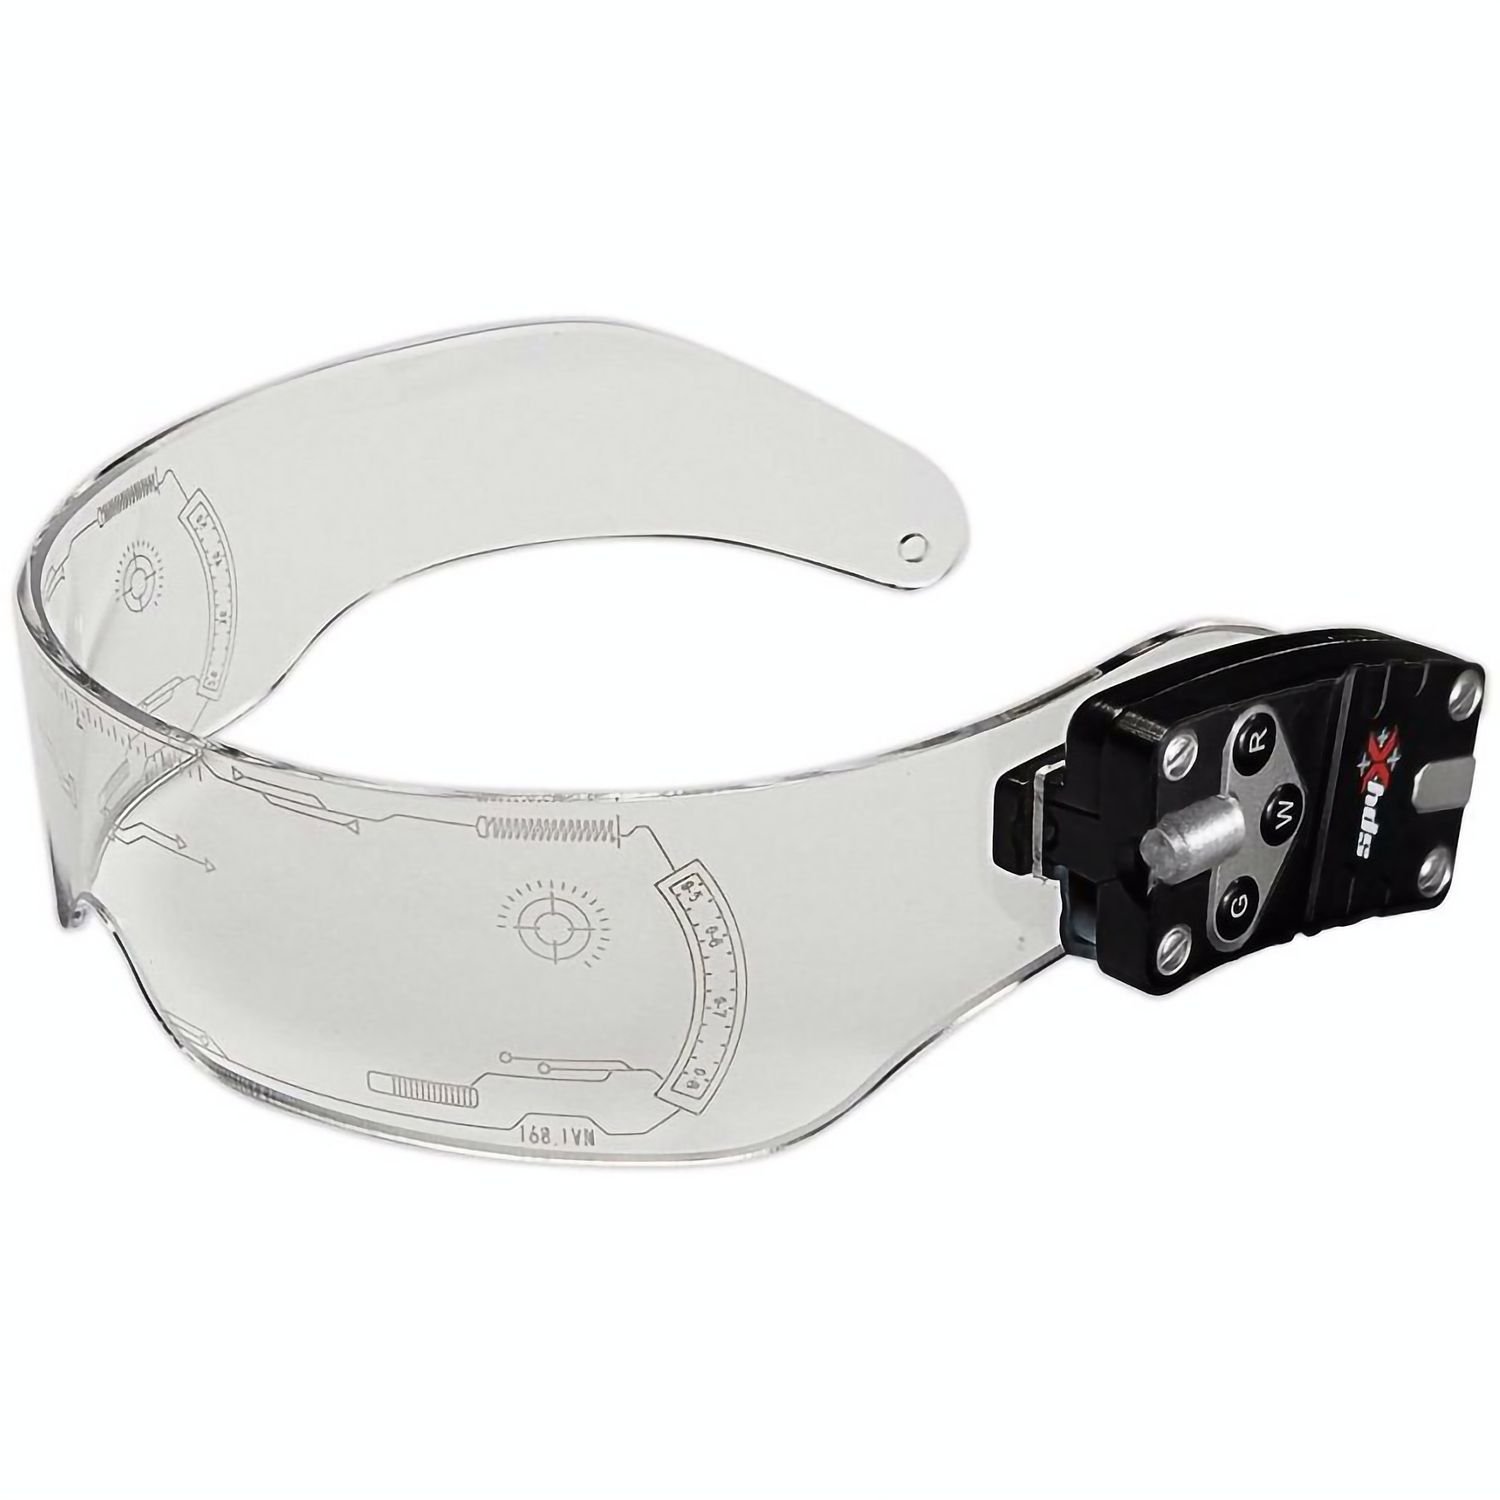 Очки ночного видения с LED-подсветкой Spy X (АМ10533) - фото 1